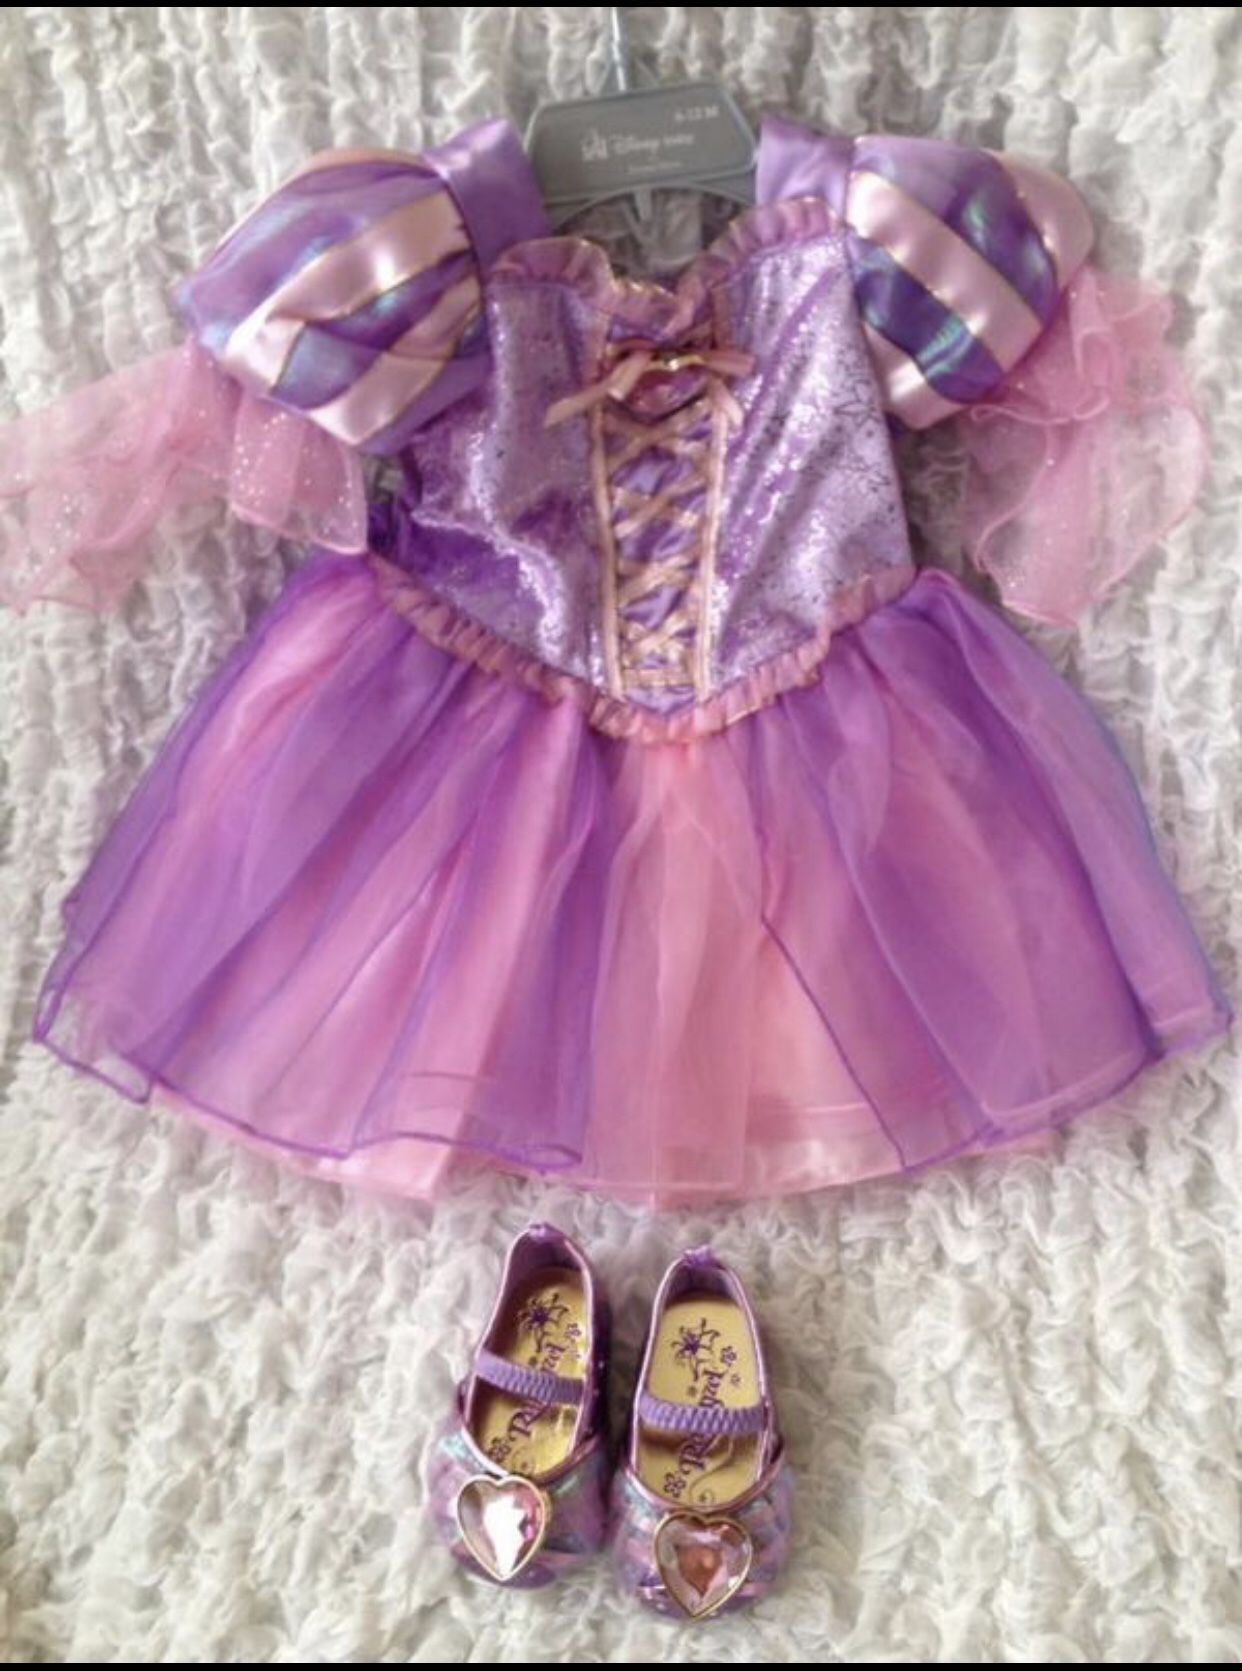 Rapunzel costume 6-12 months.